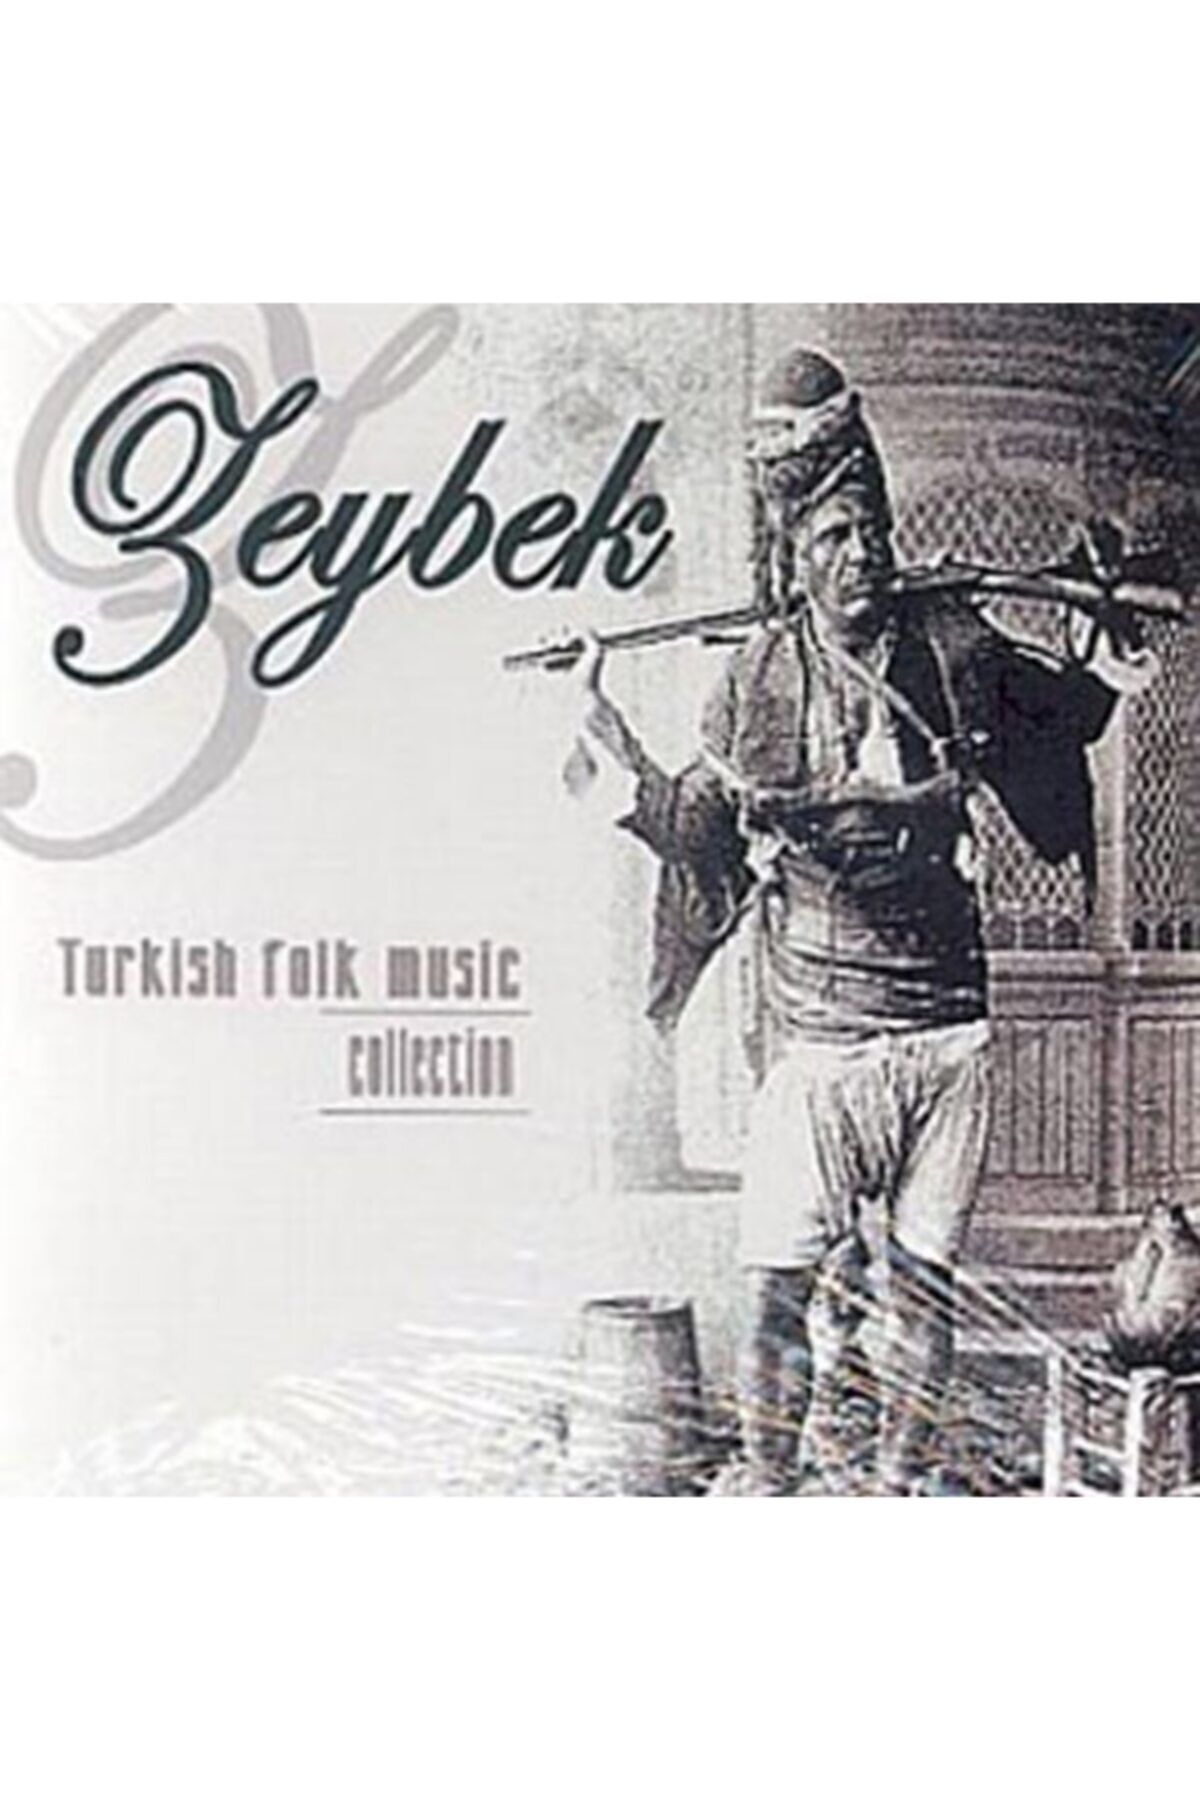 DEVSAN Zeybek (turkish Folk Music) Cd